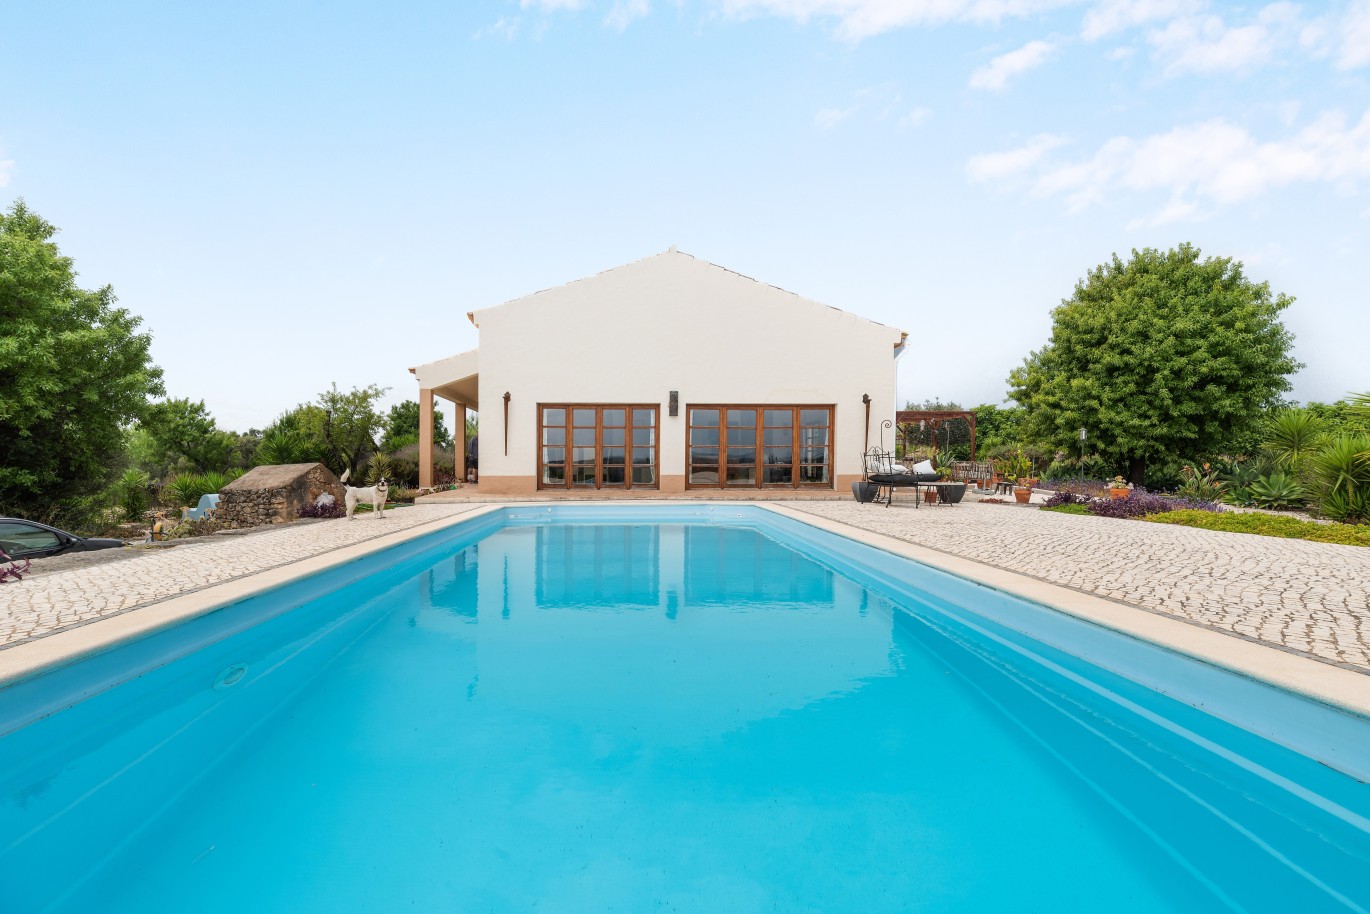 3 bedroom Villa with pool, for sale, in Mexilhoeira Grande, Algarve_227522